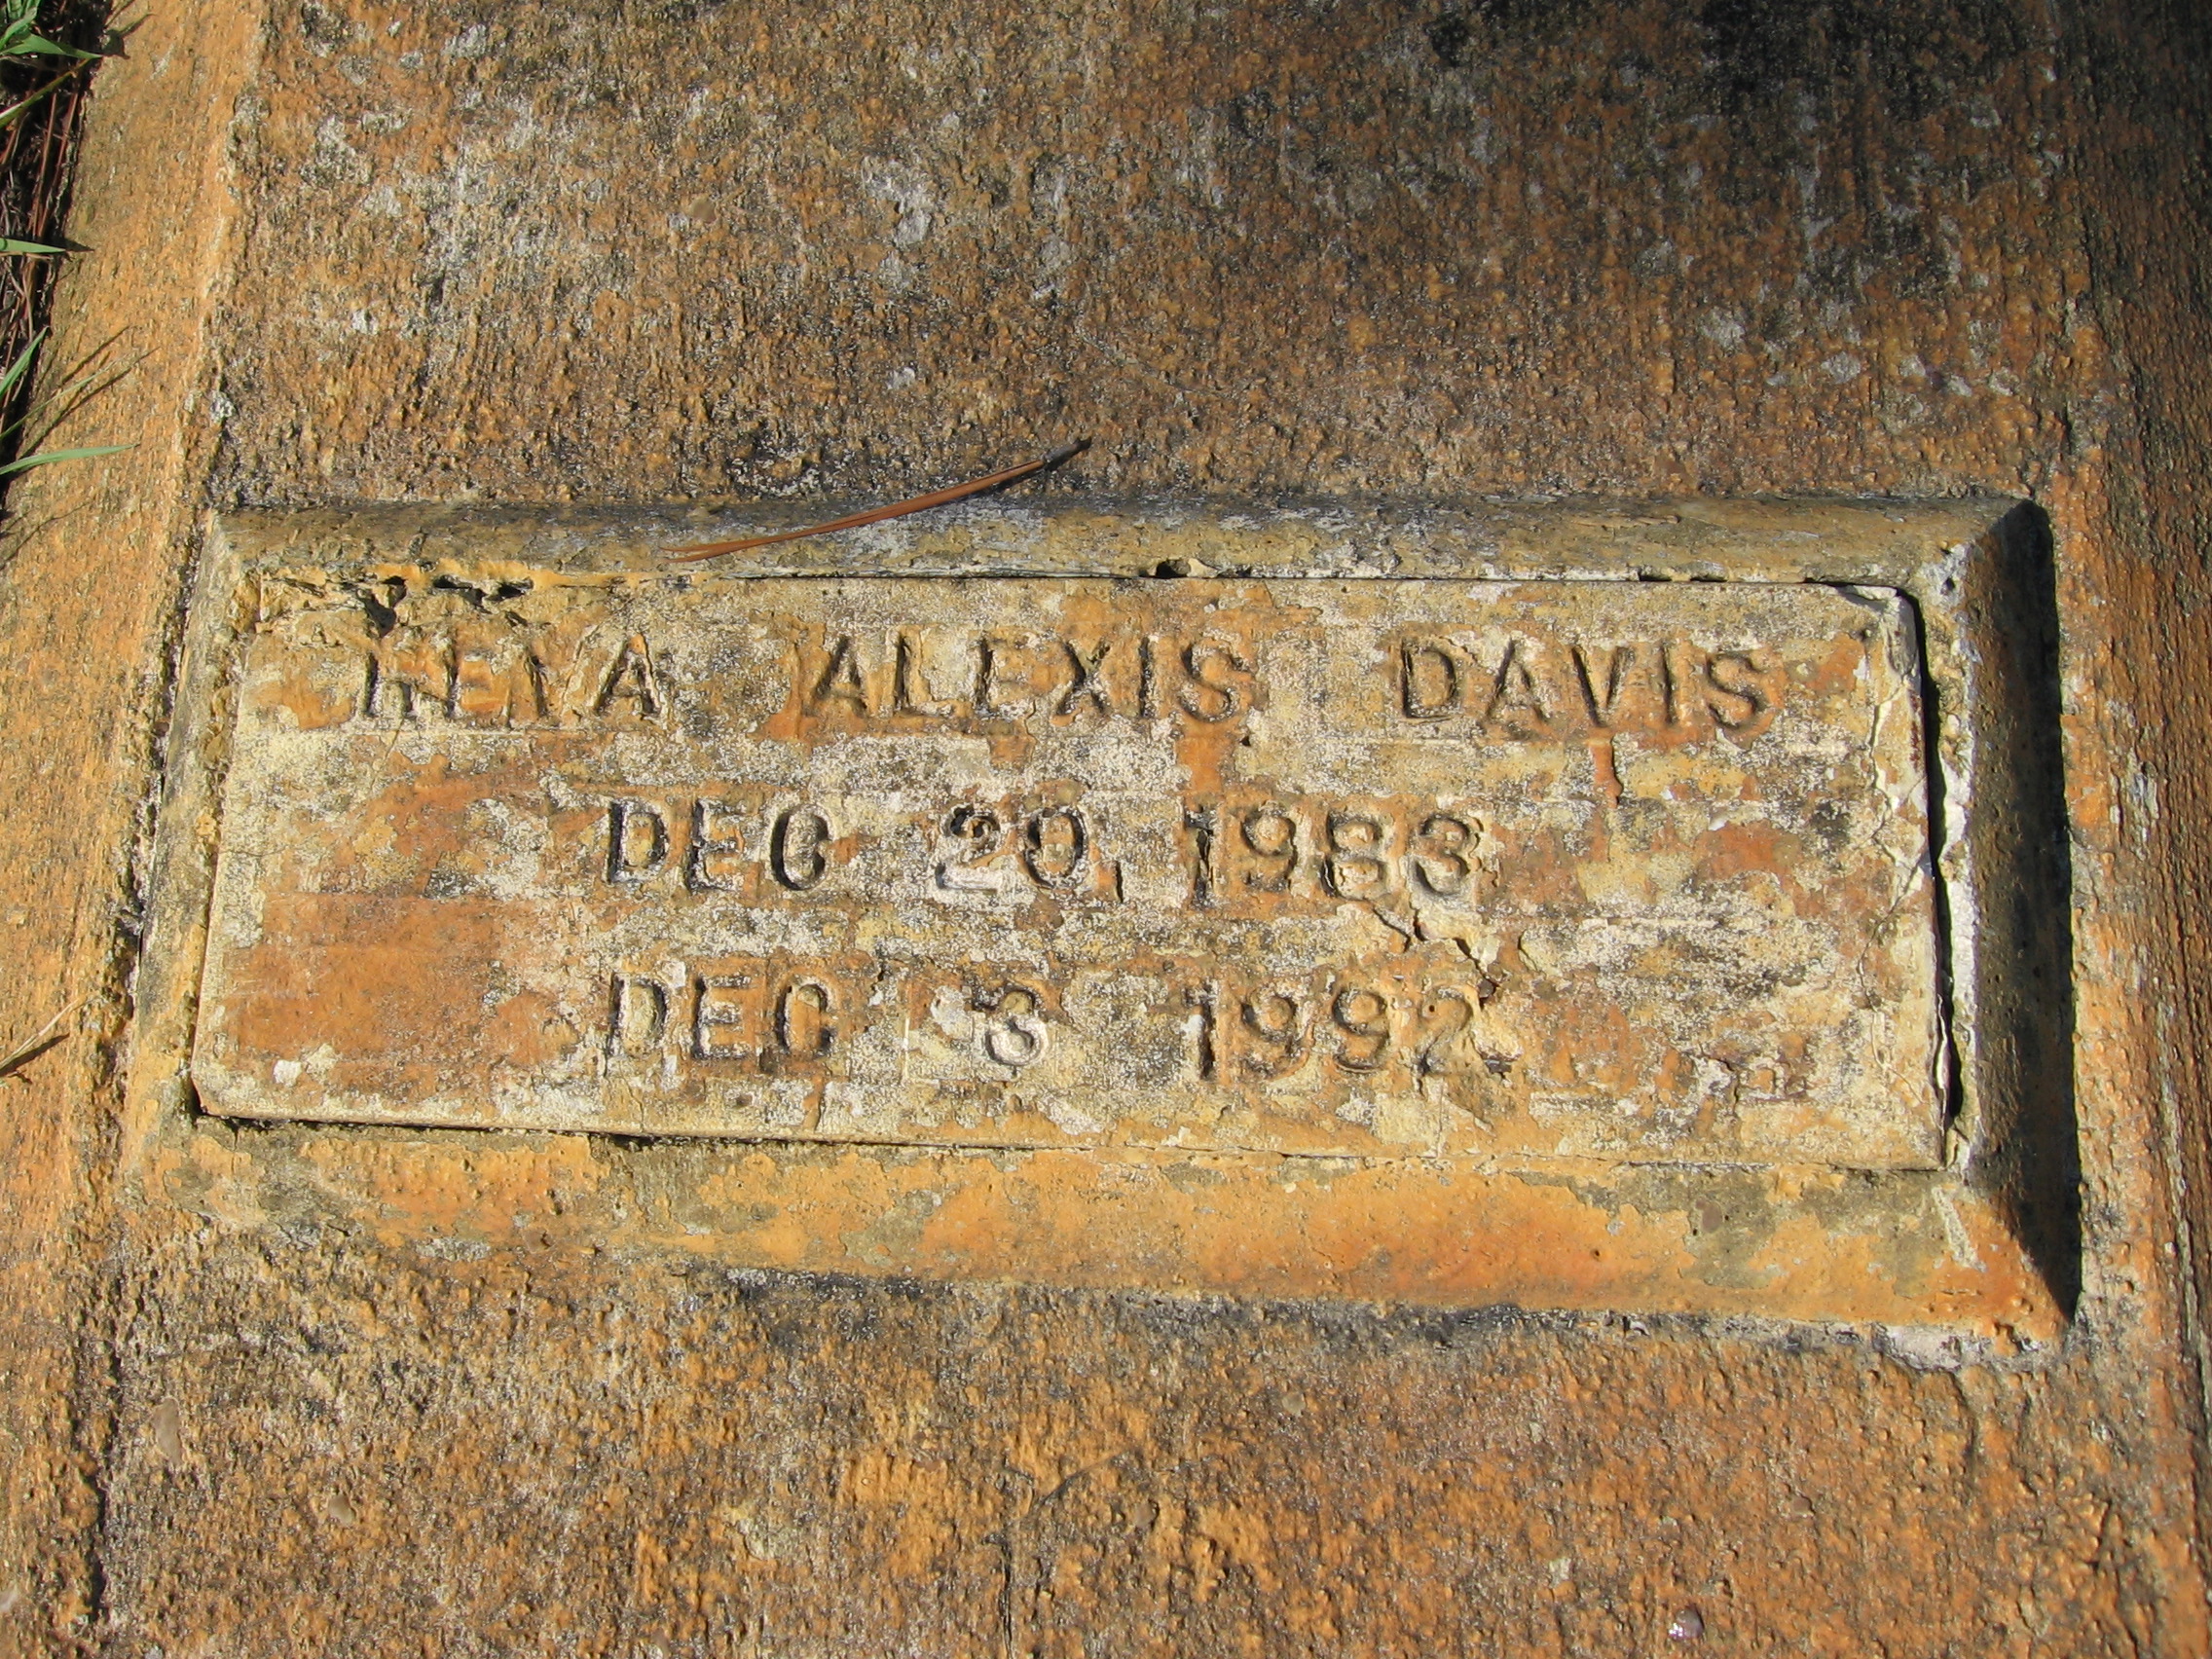 Reva Alexis Davis